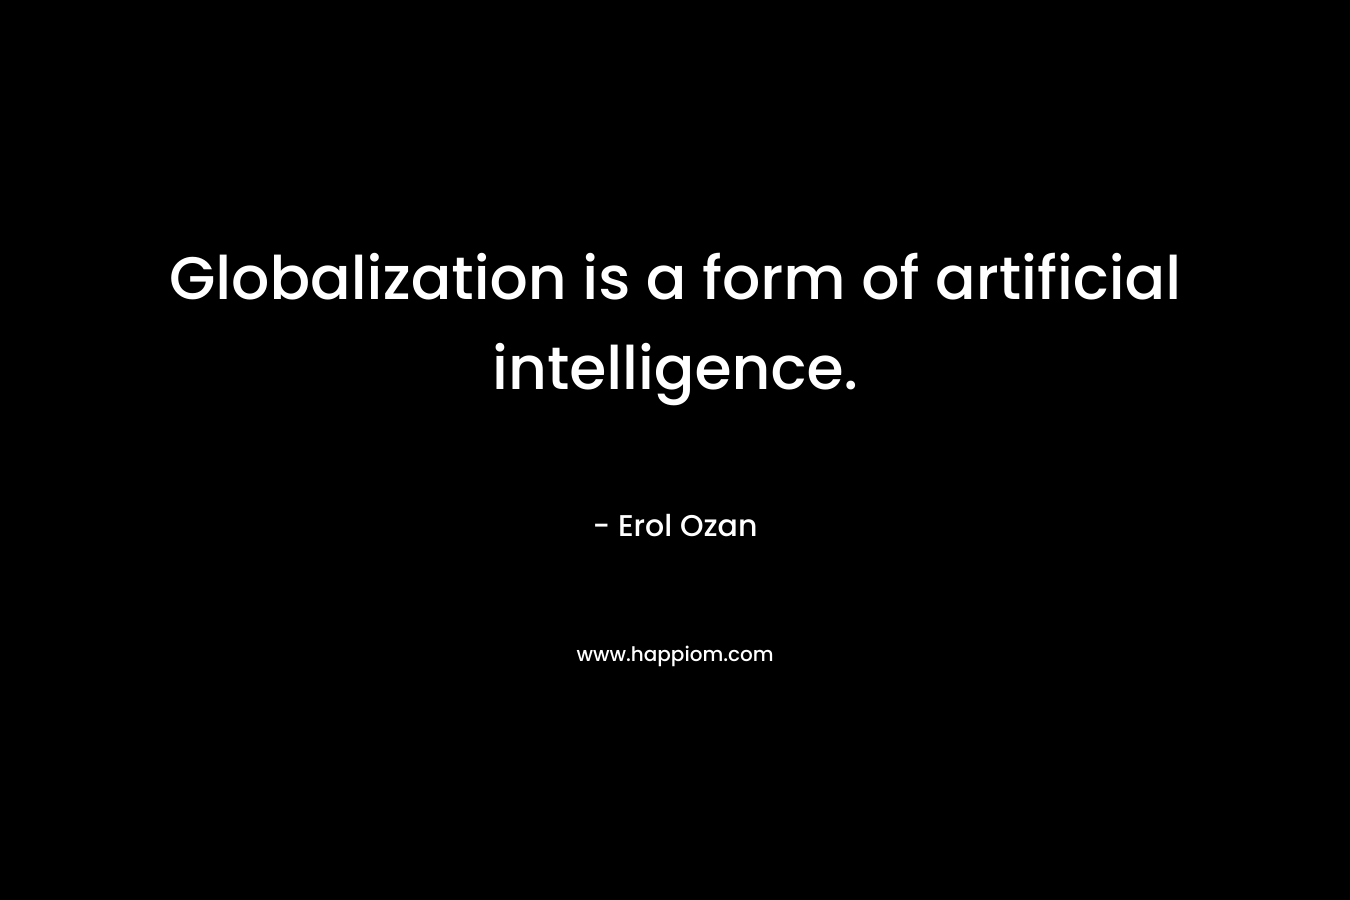 Globalization is a form of artificial intelligence. – Erol Ozan